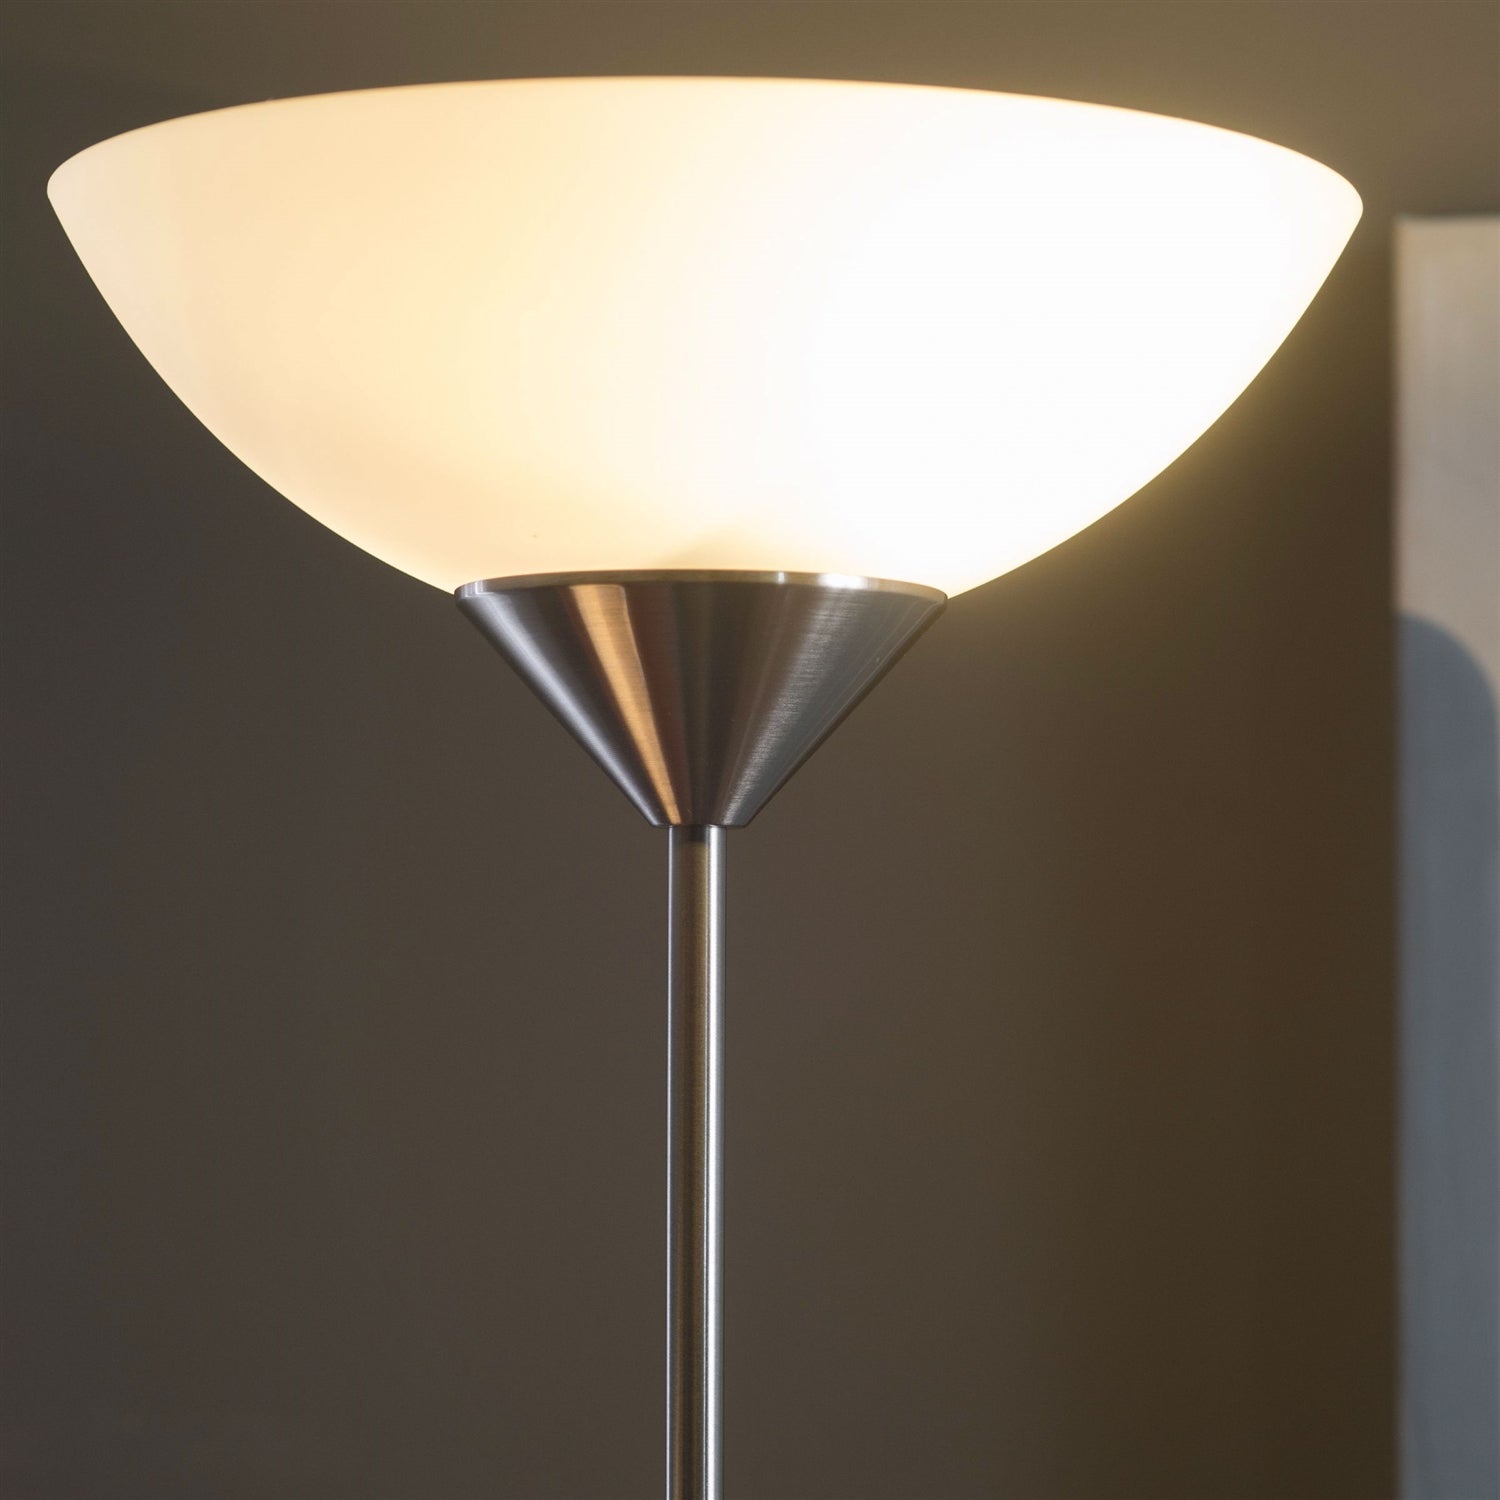 Lighting > Floor Lamps - Modern 71-inch High Floor Lamp With Gooseneck Reading Light